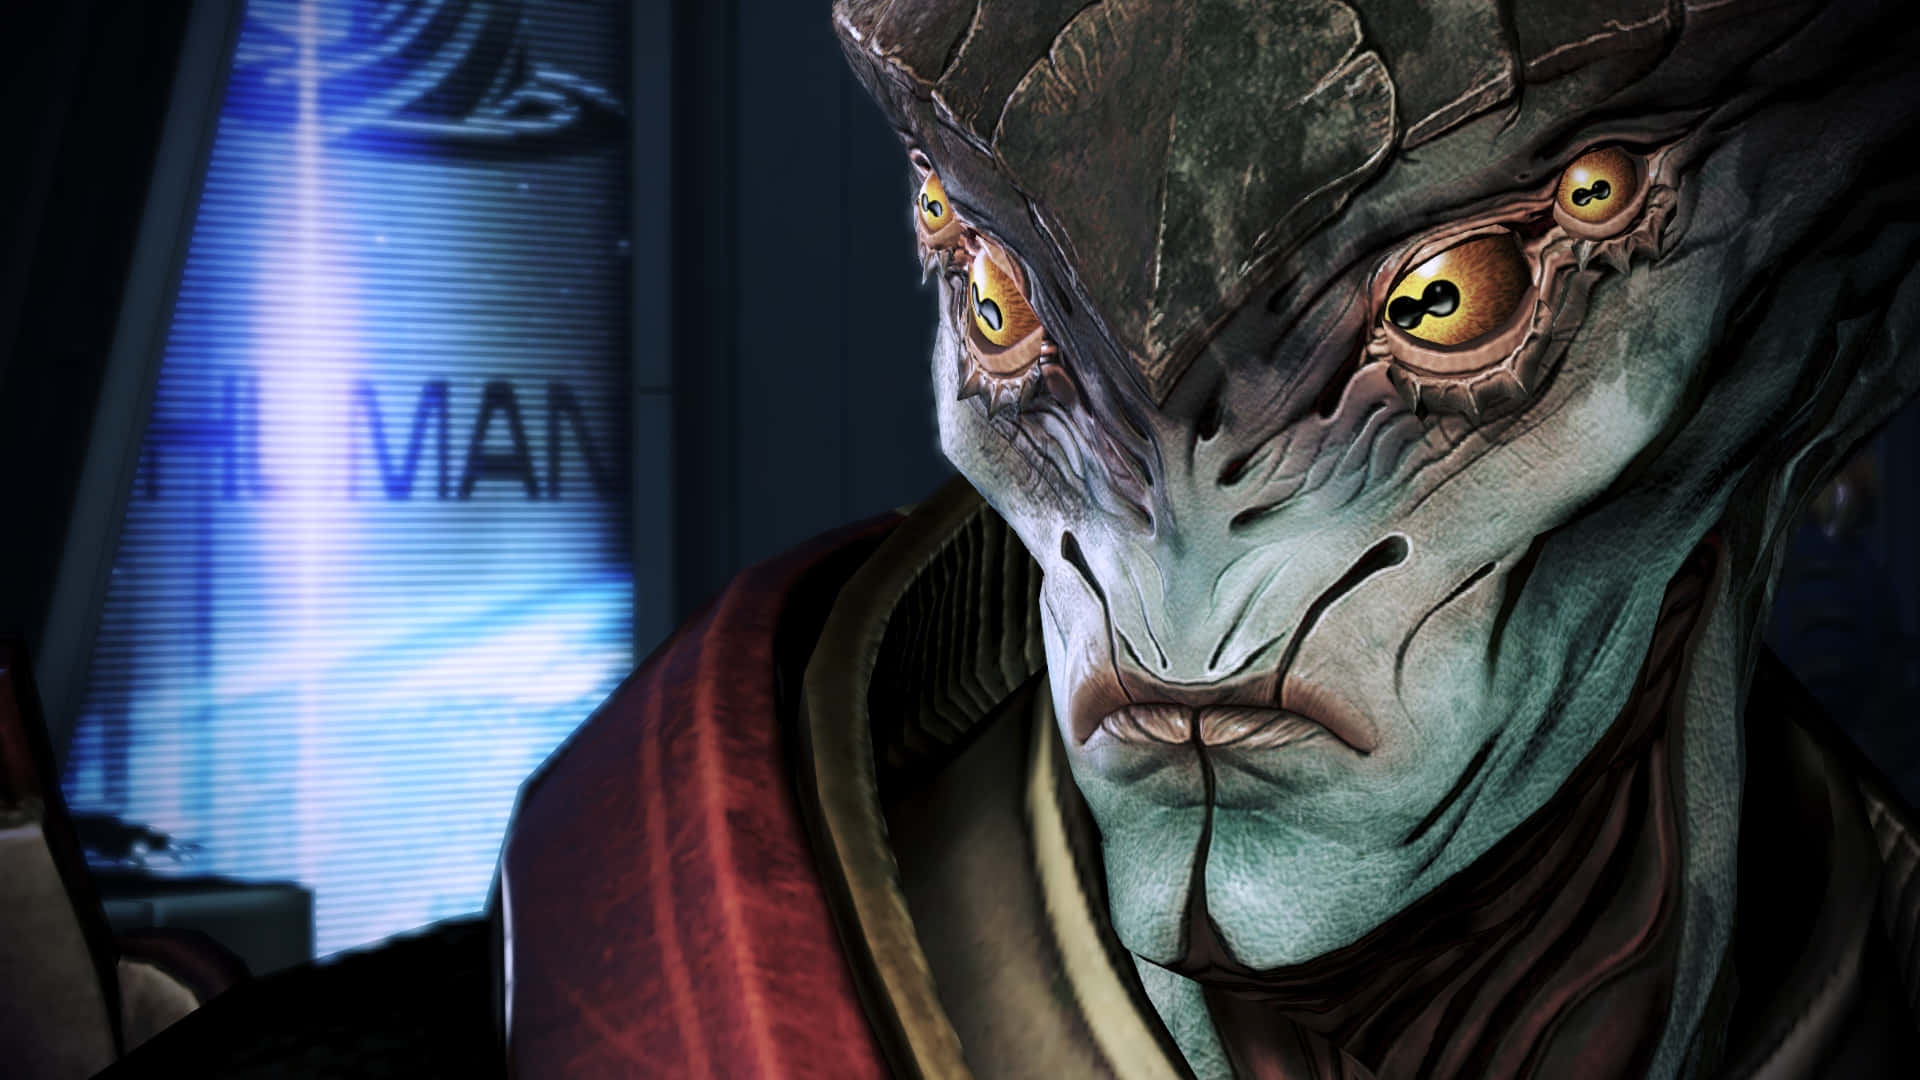 Javik - The Last Prothean in Mass Effect Wallpaper